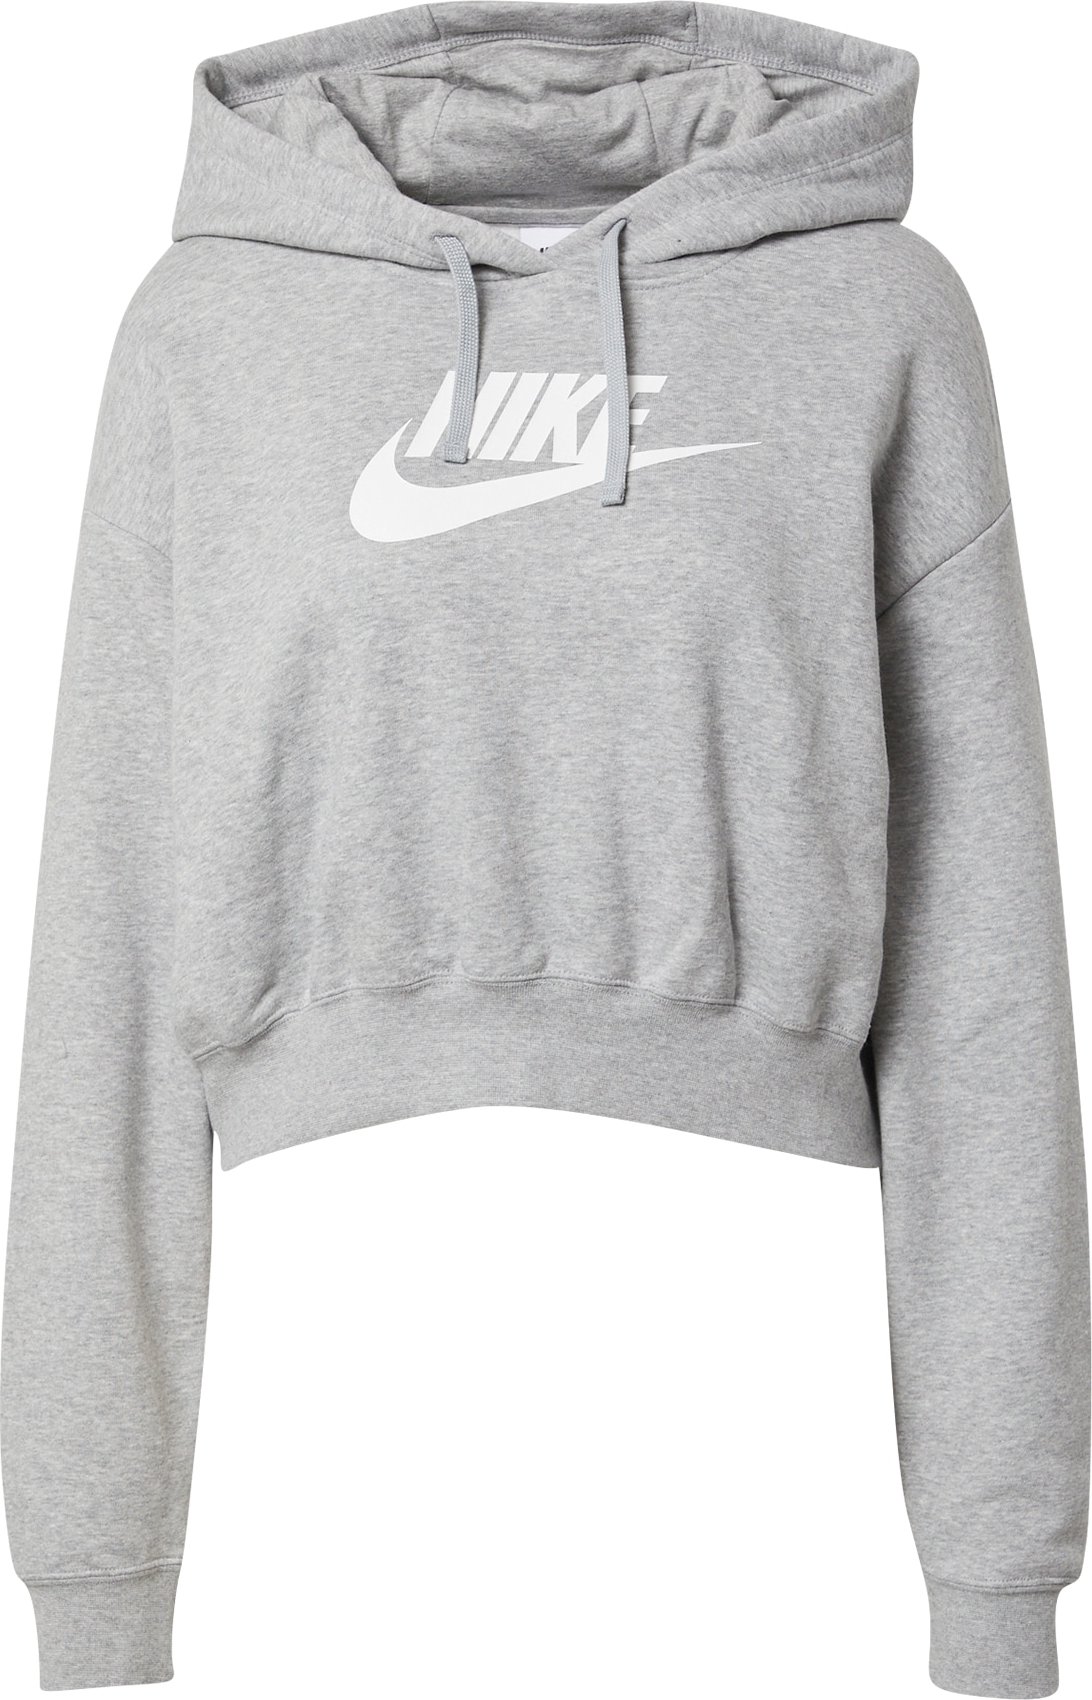 Nike Sportswear Mikina tmavě šedá / bílá